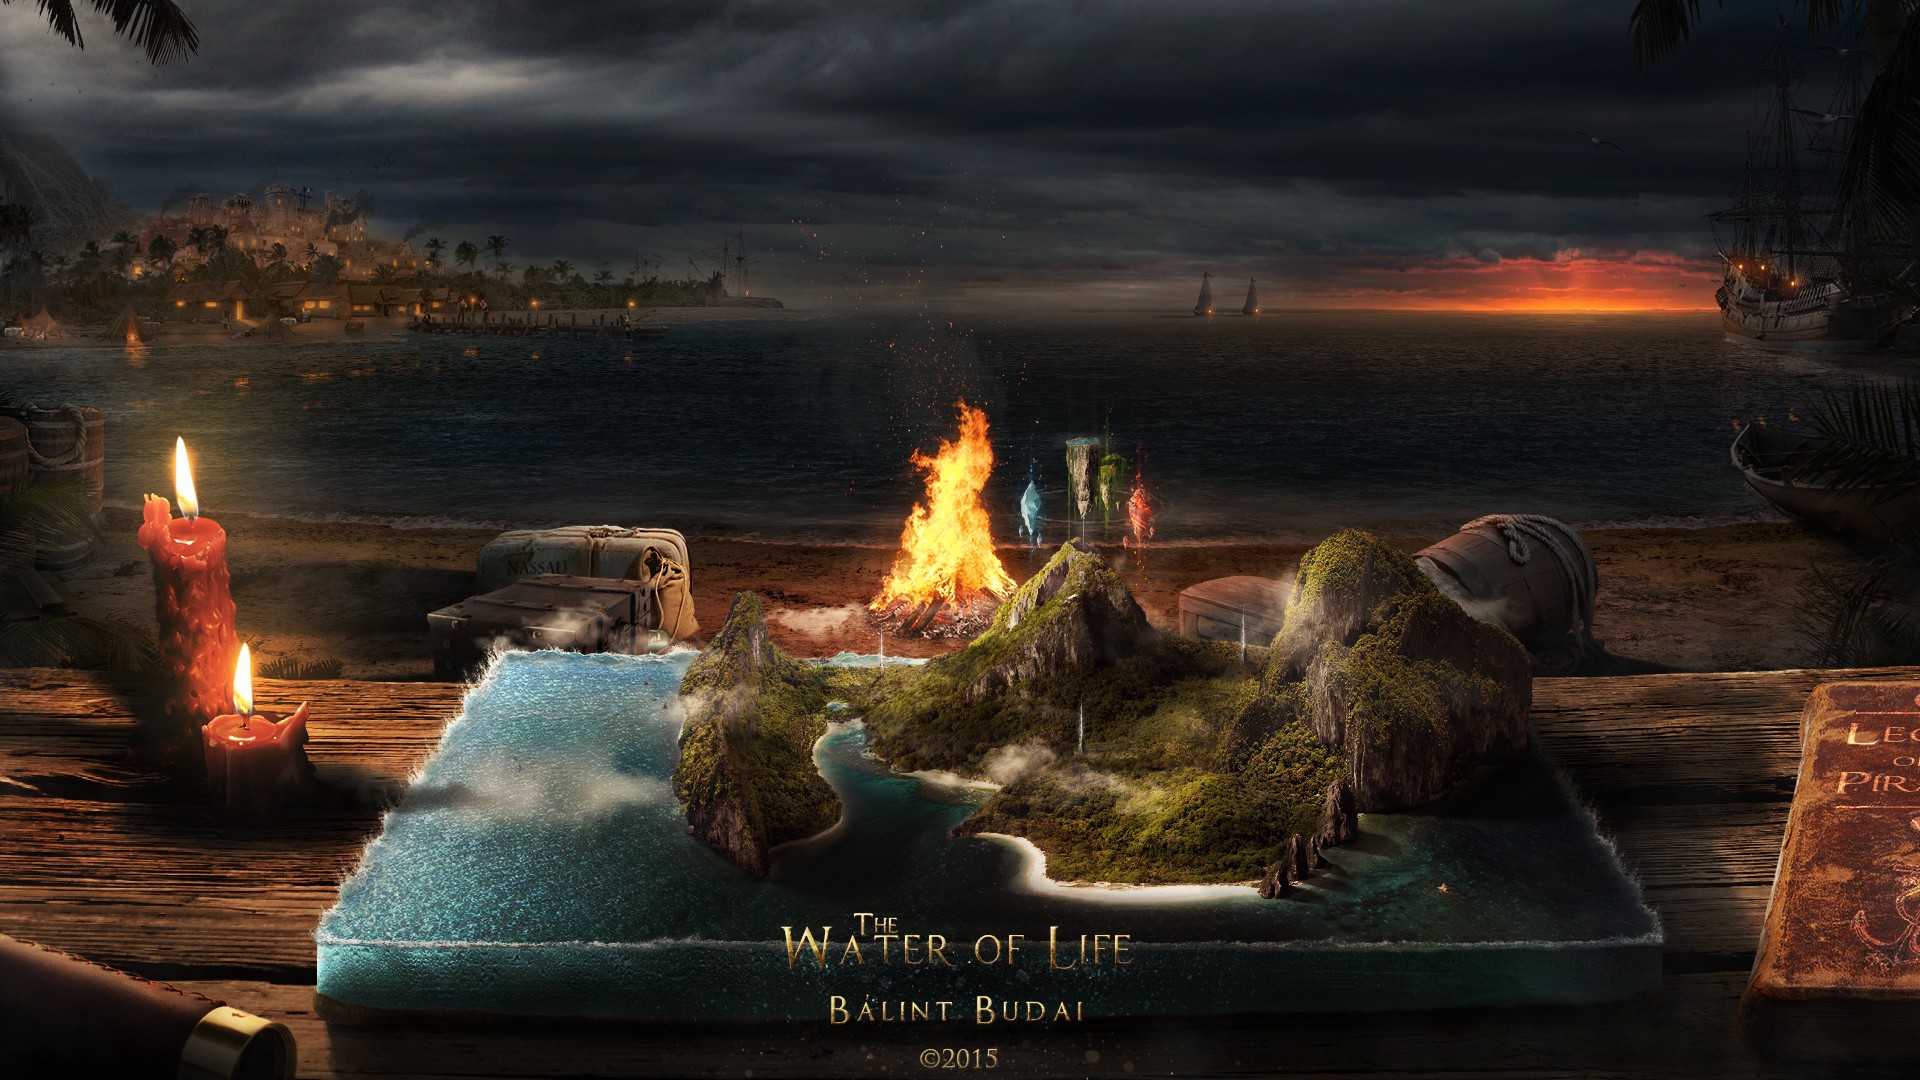 magic, Island, Life, Elements, Sea, Nassau, Candles, Barrels, Boat, Palm trees, Books, Night, Campfire Wallpaper